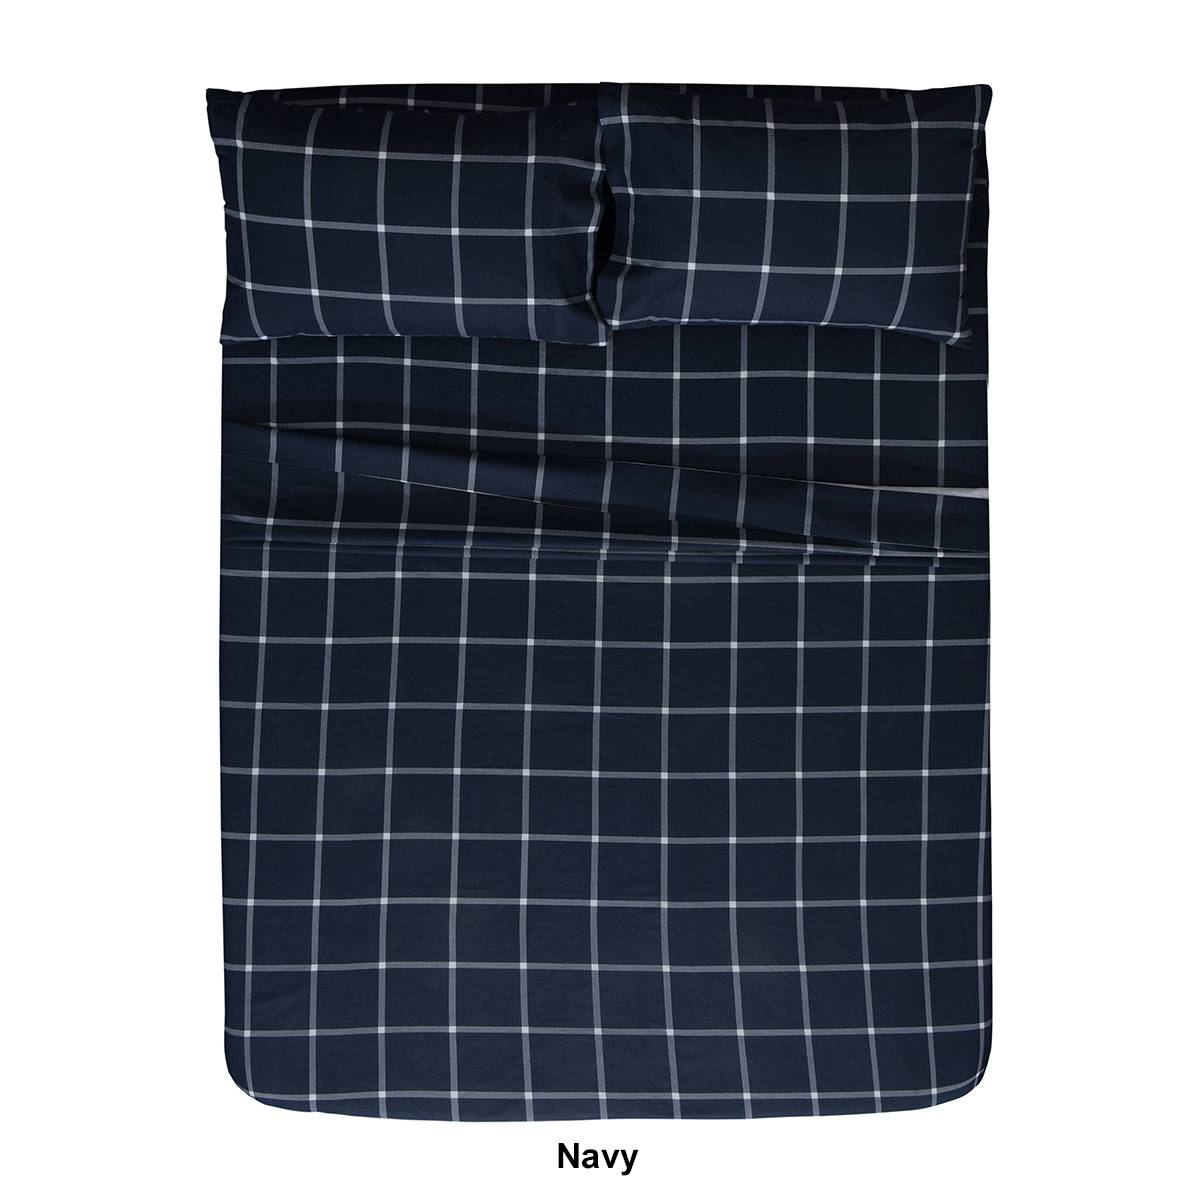 EnvioHome Durable Cotton Winter Flannel Checkered Sheet Set